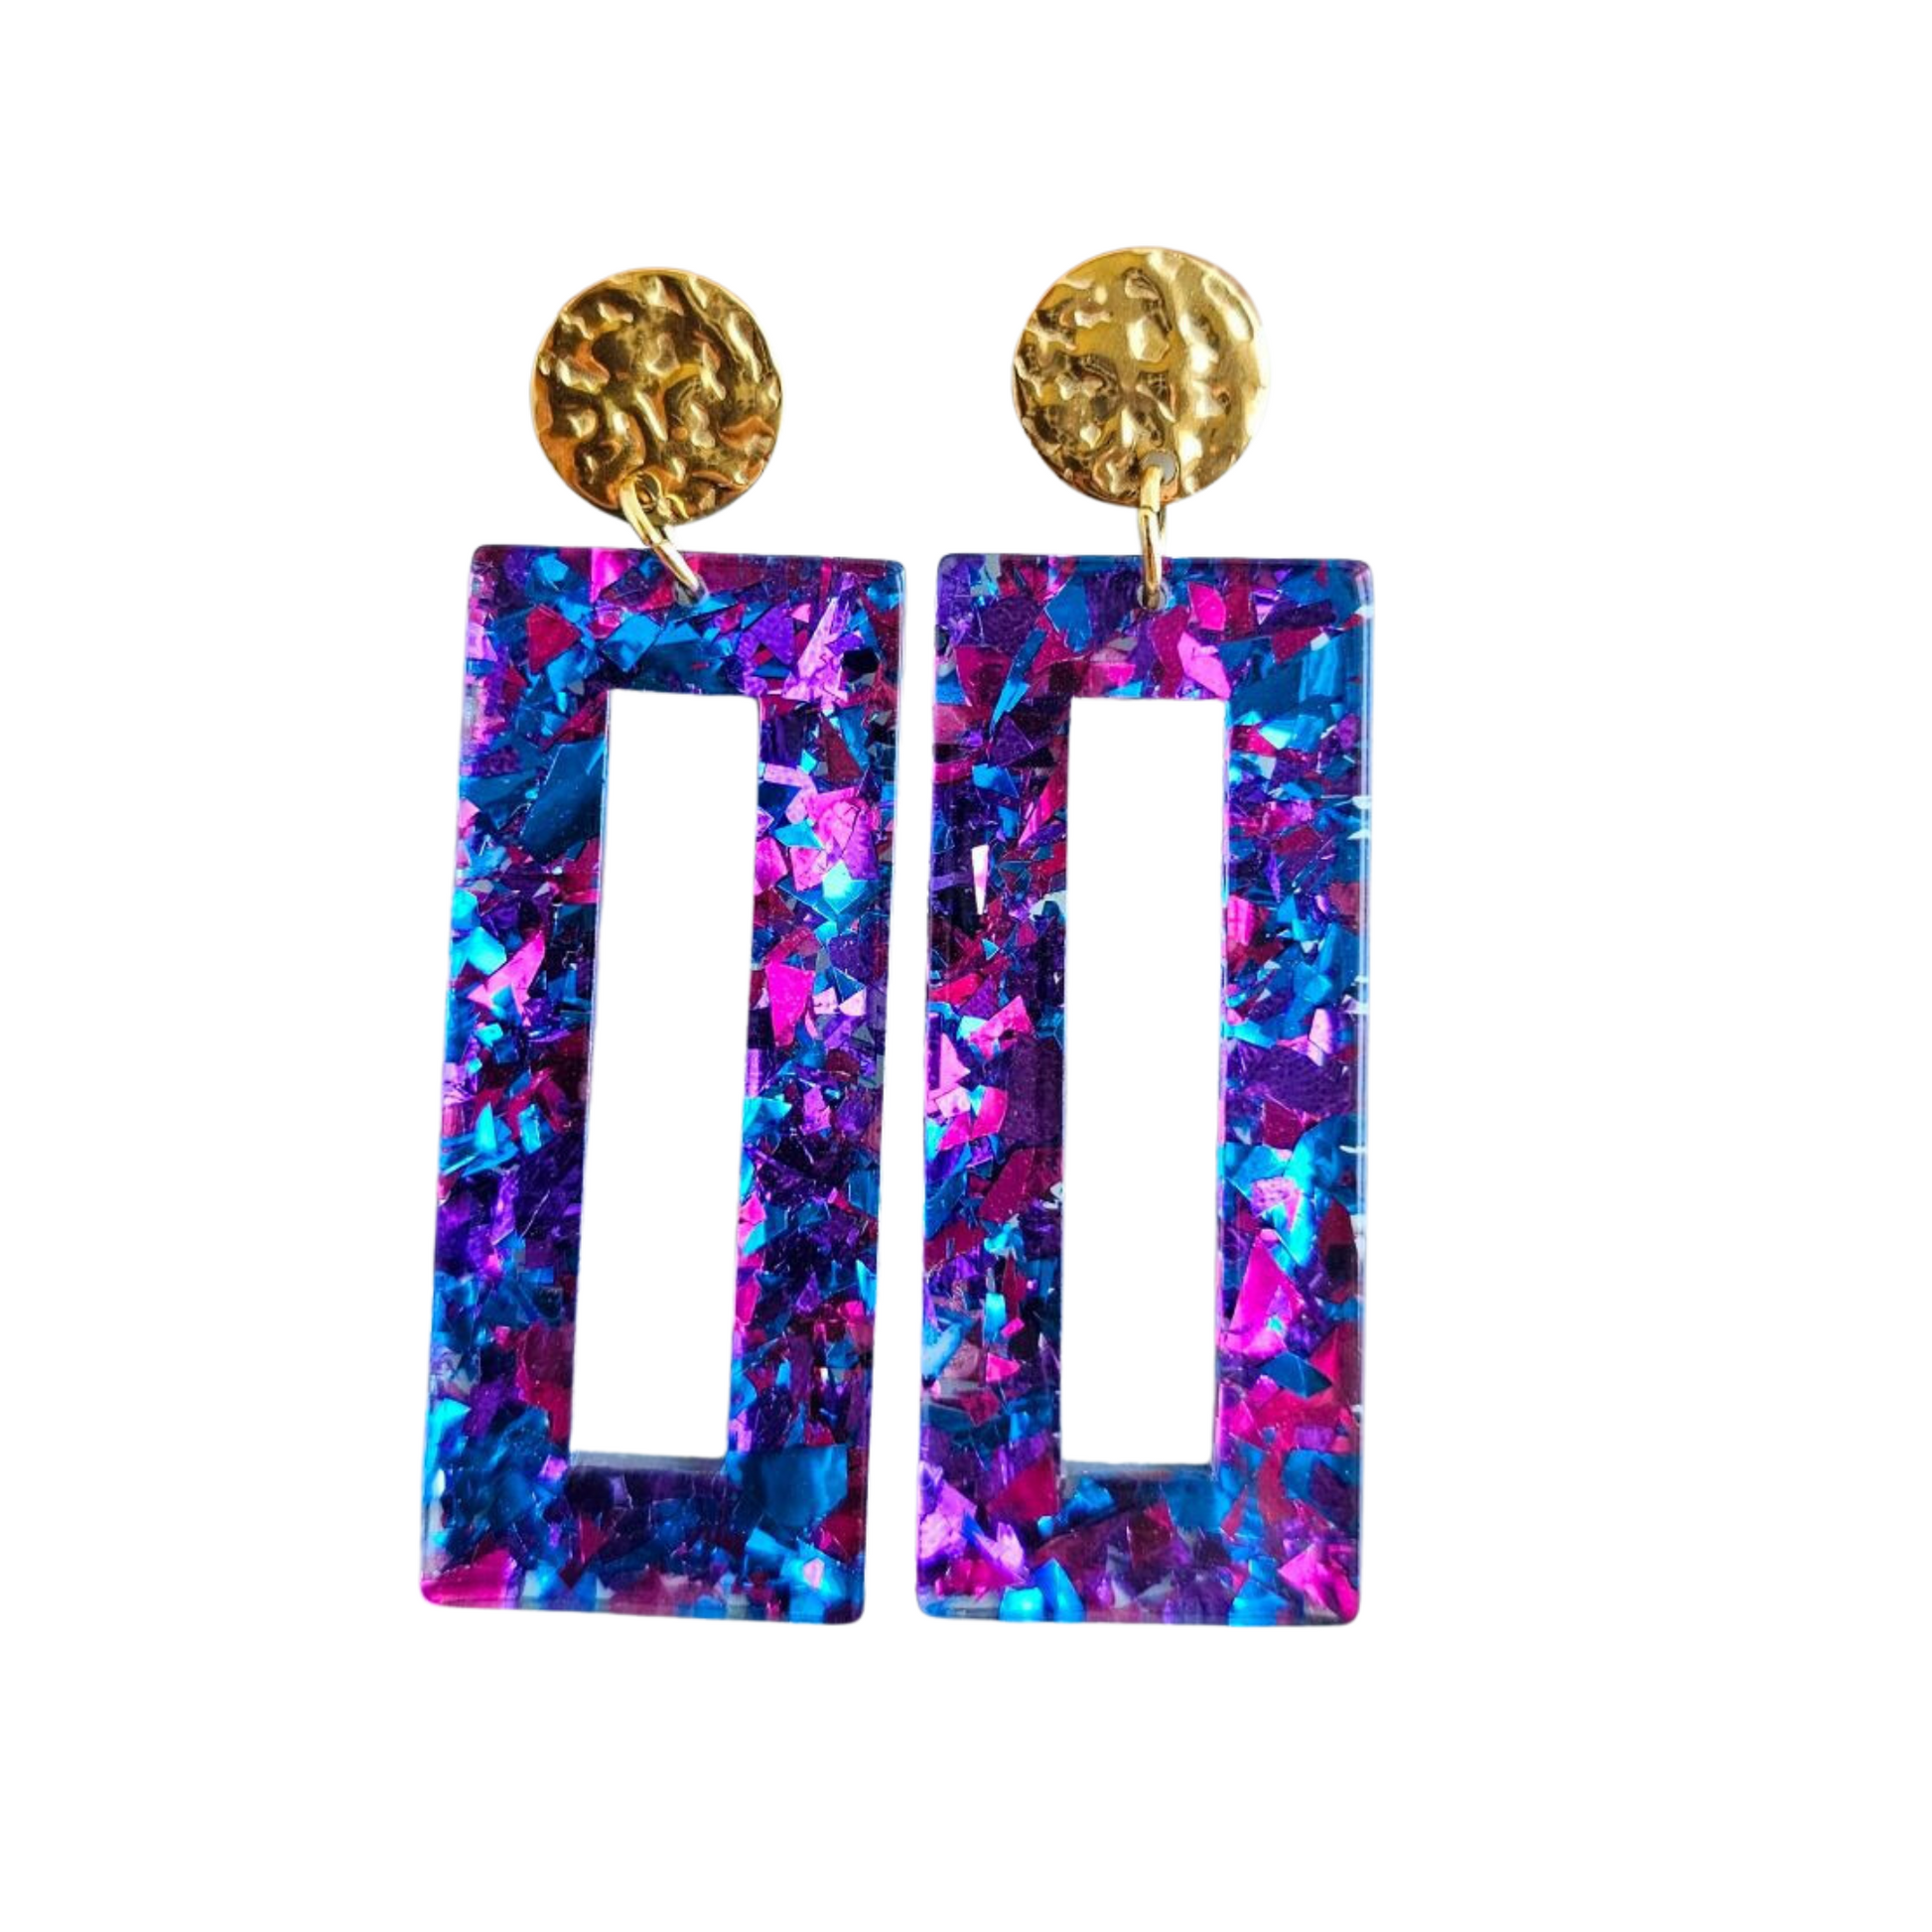 A pair of Confetti Geometric Earrings- Blue from MECHEE